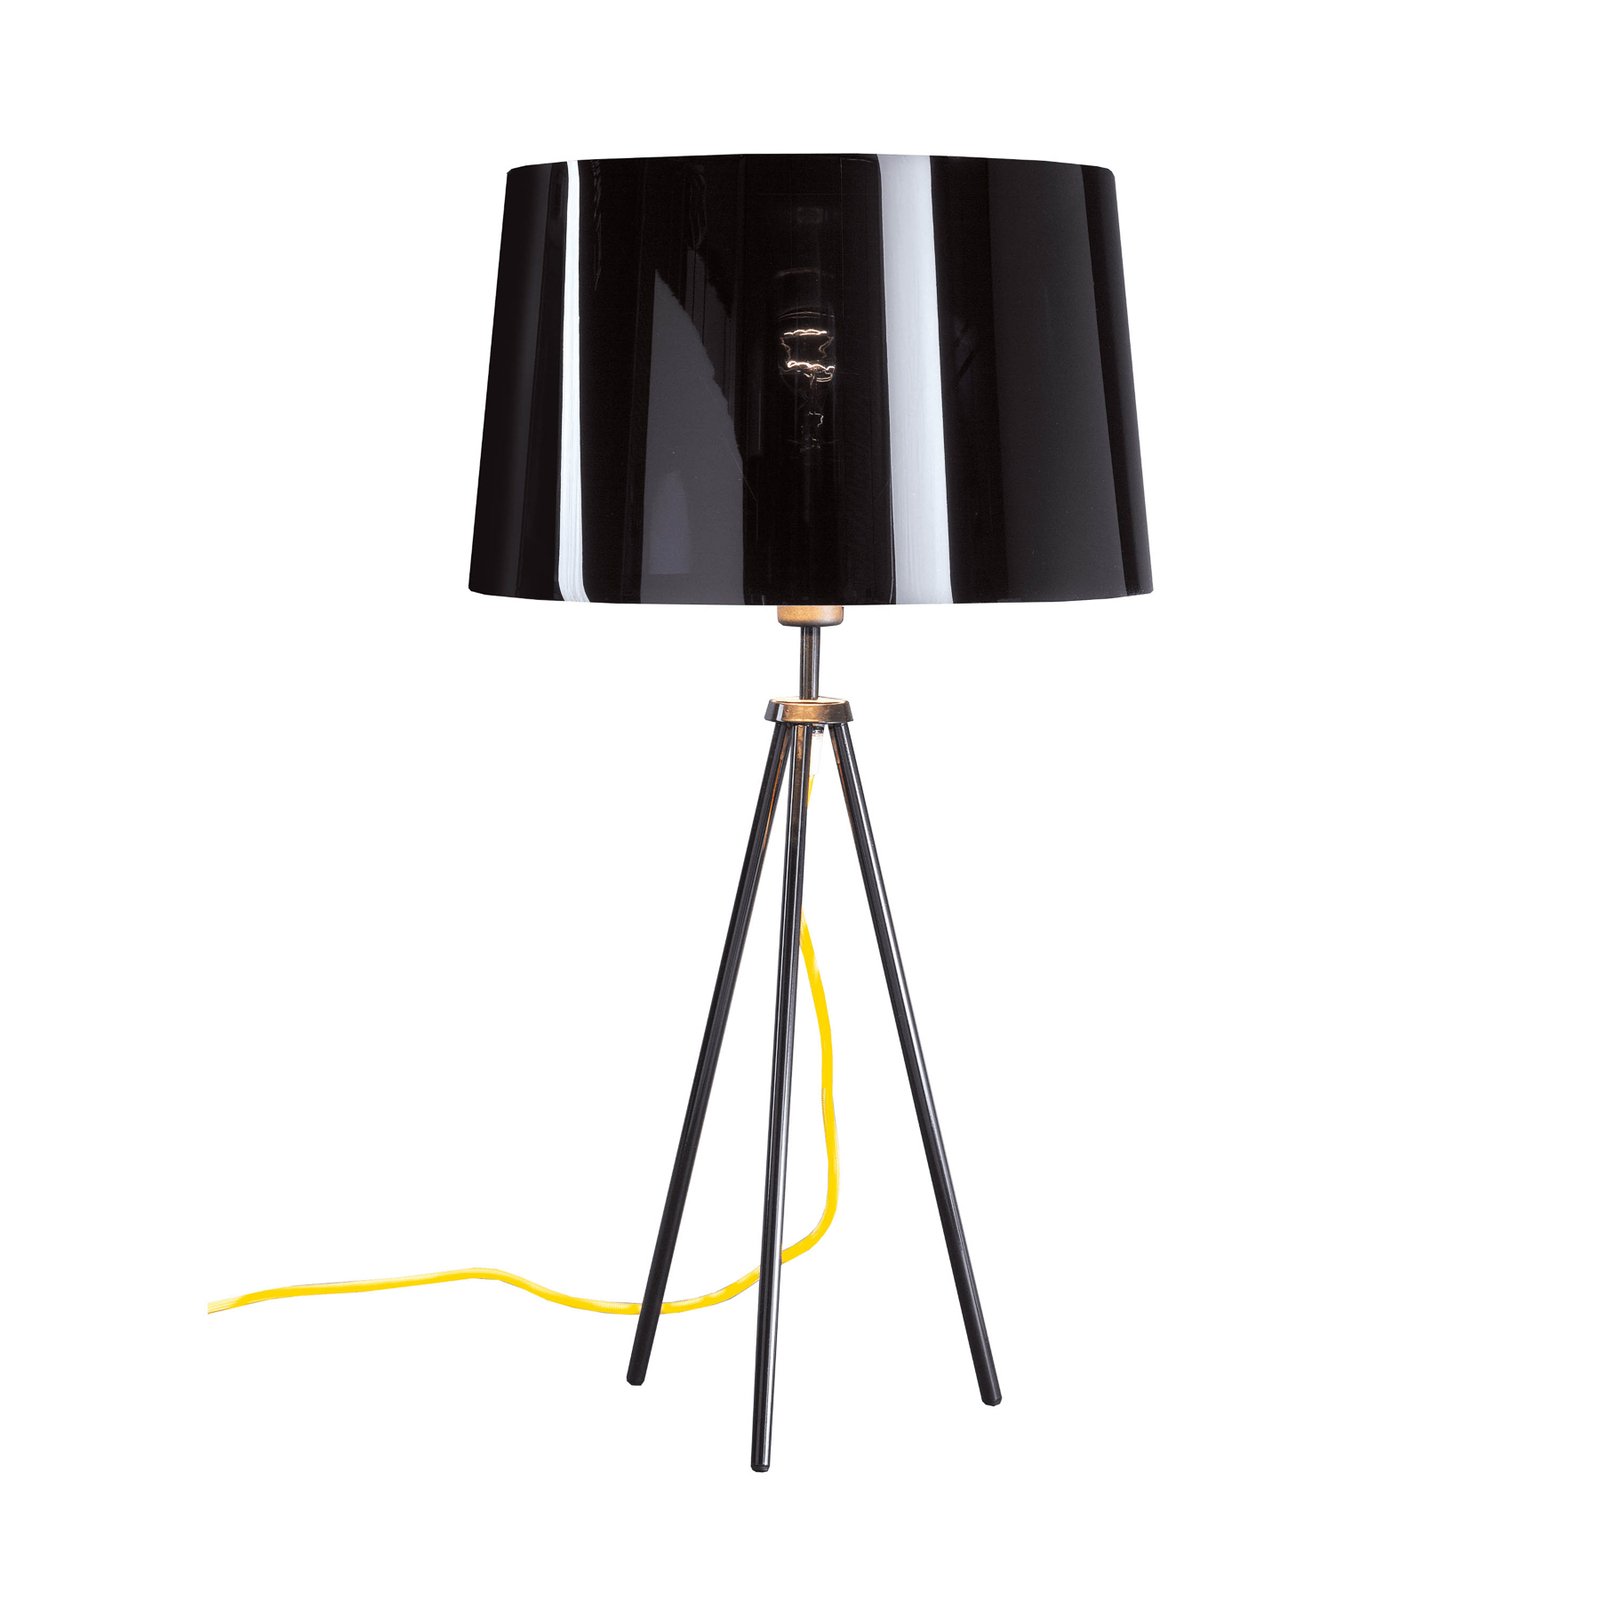 Aluminor Tropic stolová lampa čierna, kábel žltá